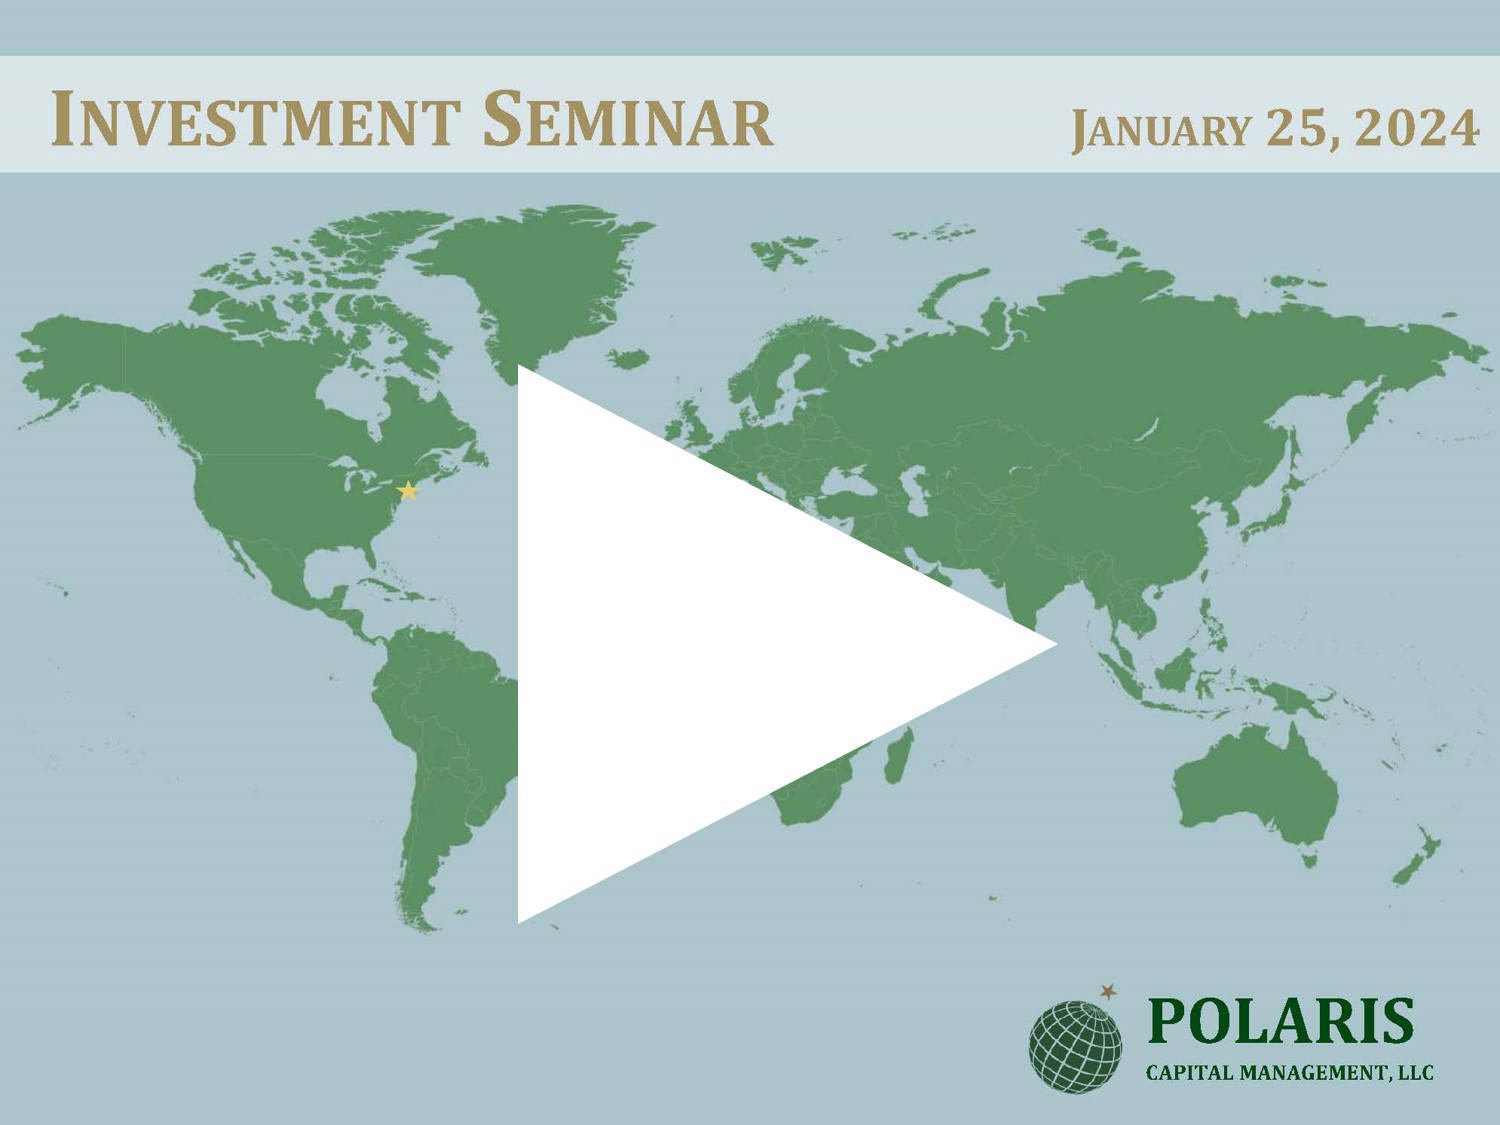 Watch the Polaris 2024 Investment Seminar